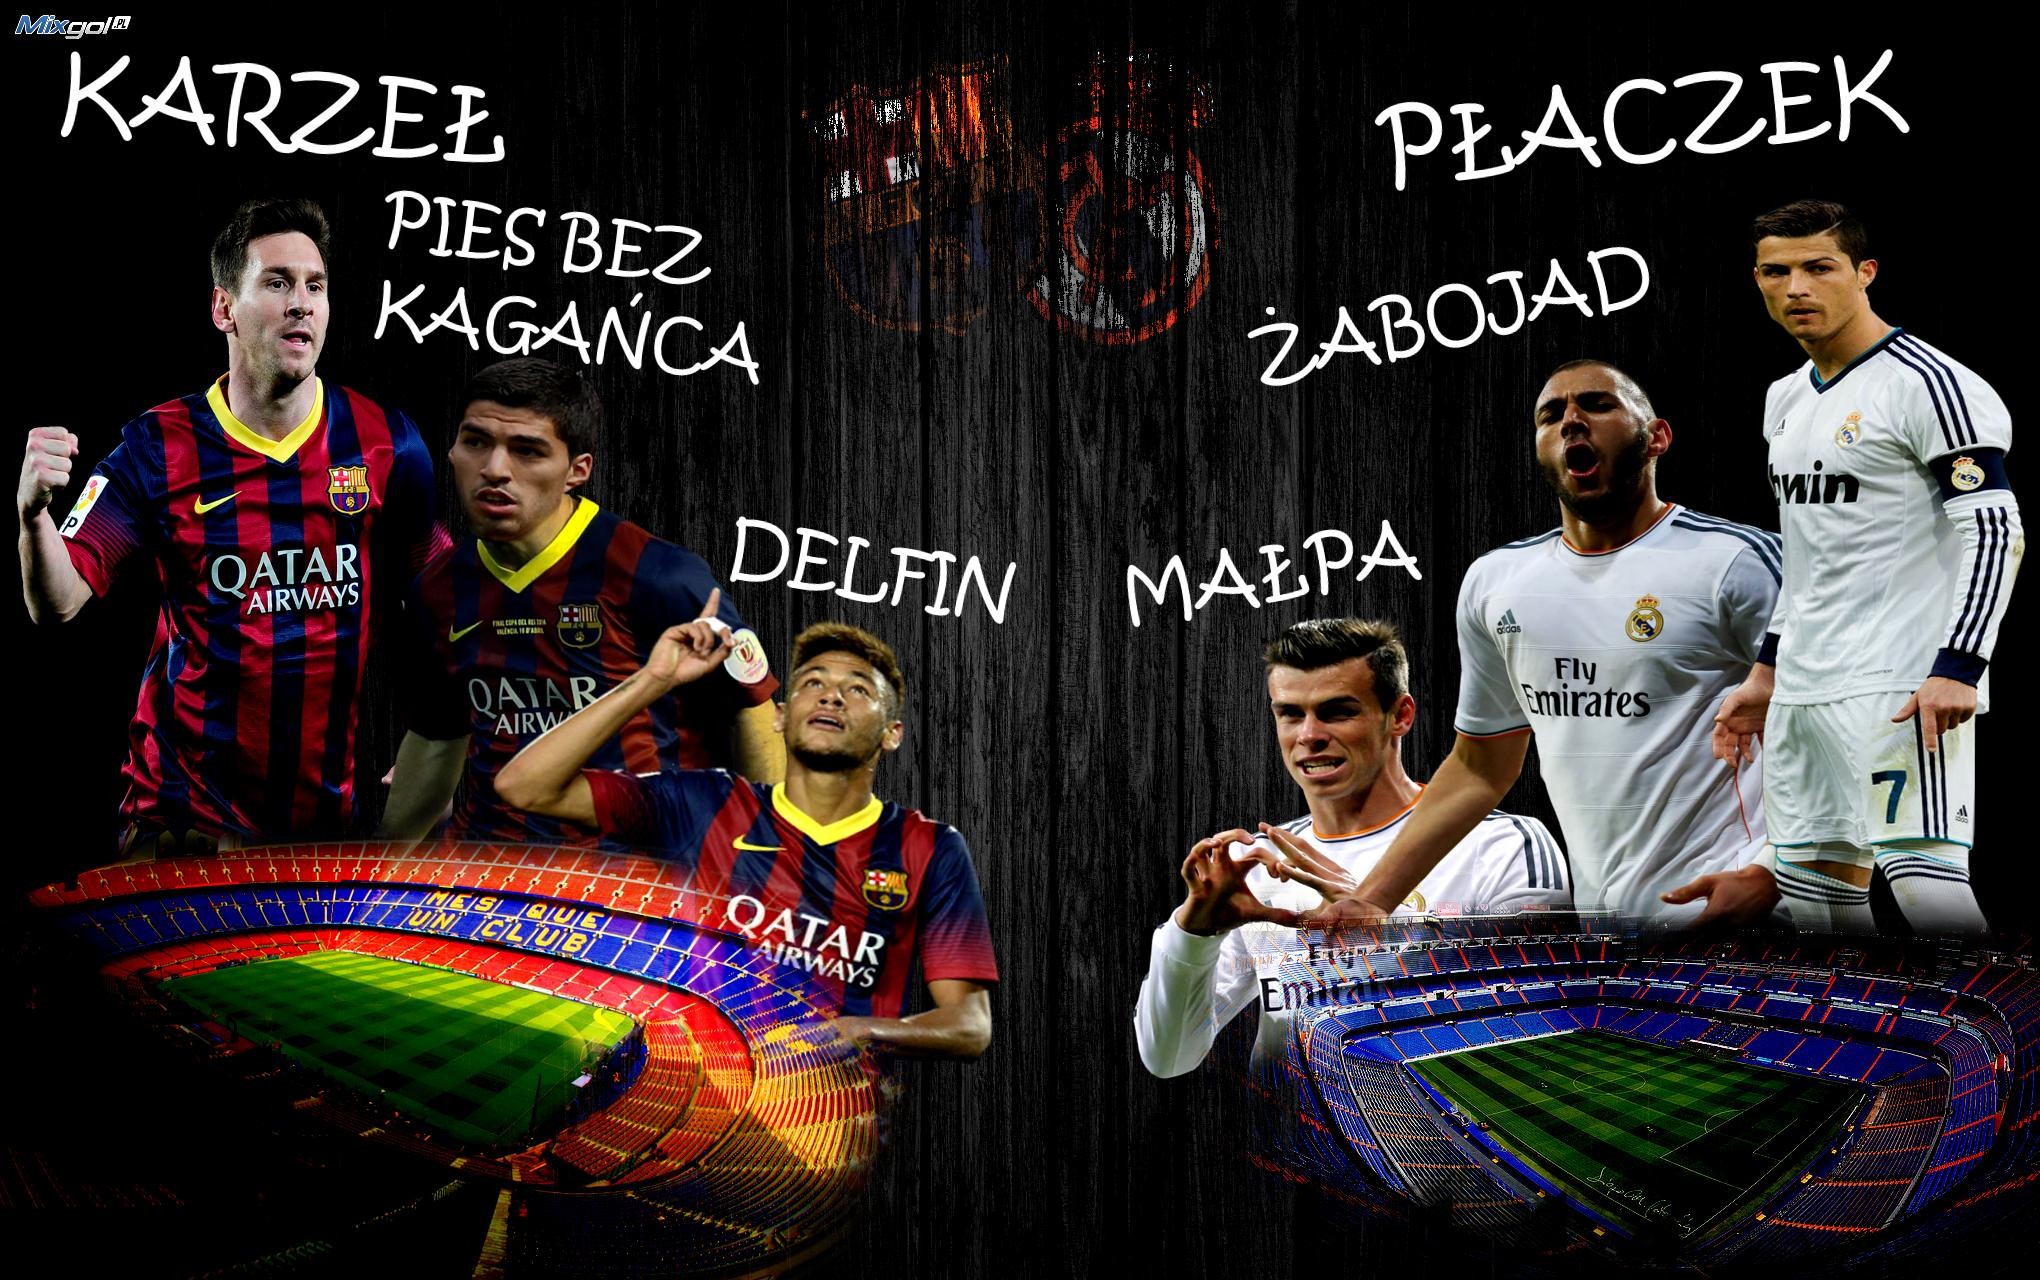 Football Star Players poster Print Image Neymar Ronaldo Messi Mbappe Hazard  A4  eBay